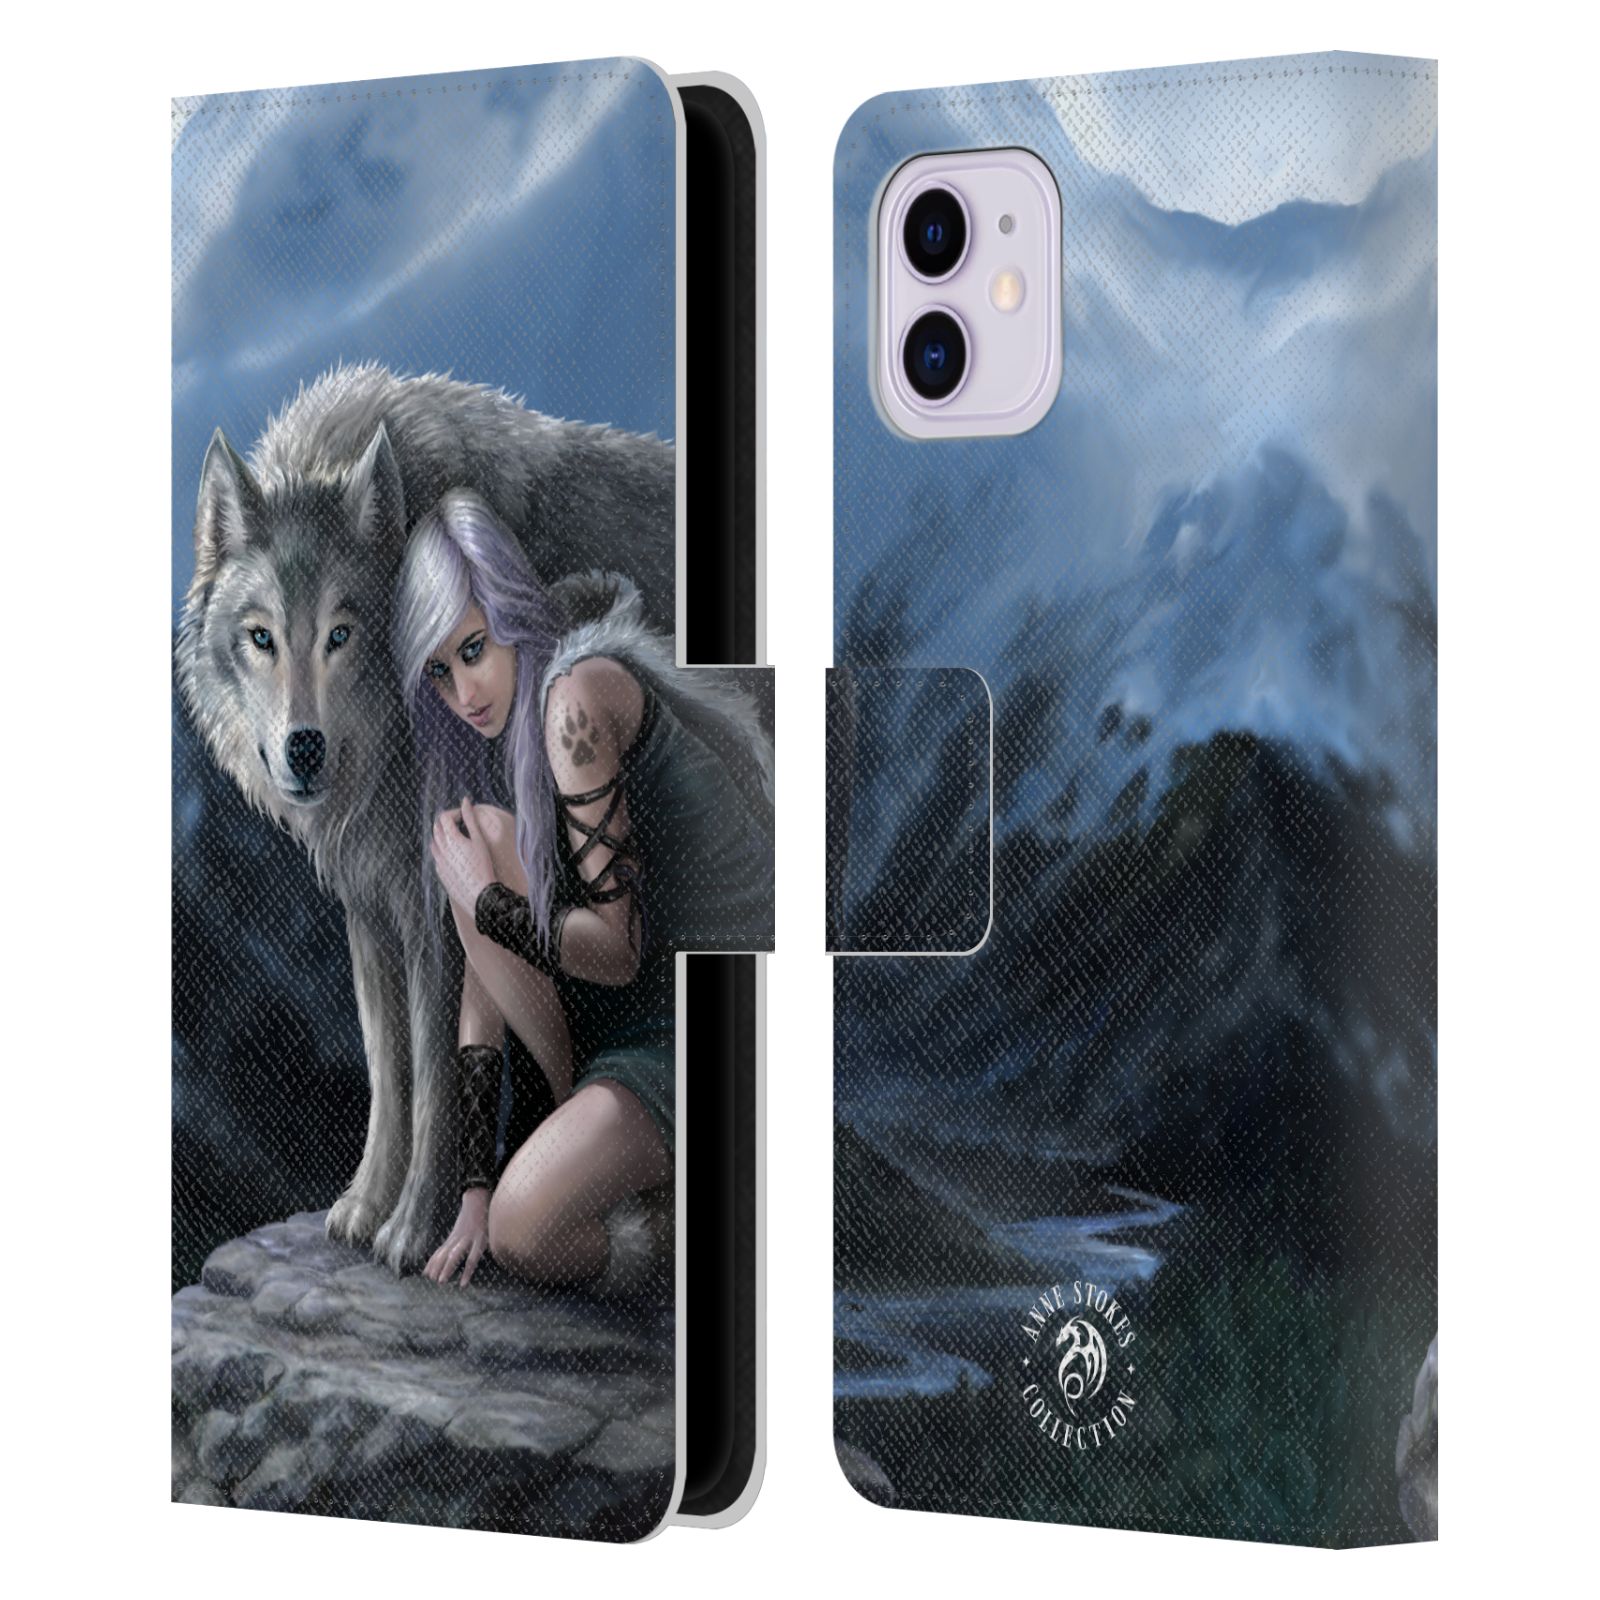 Pouzdro na mobil Apple Iphone 11 - Head Case - fantasy - vlk ochránce